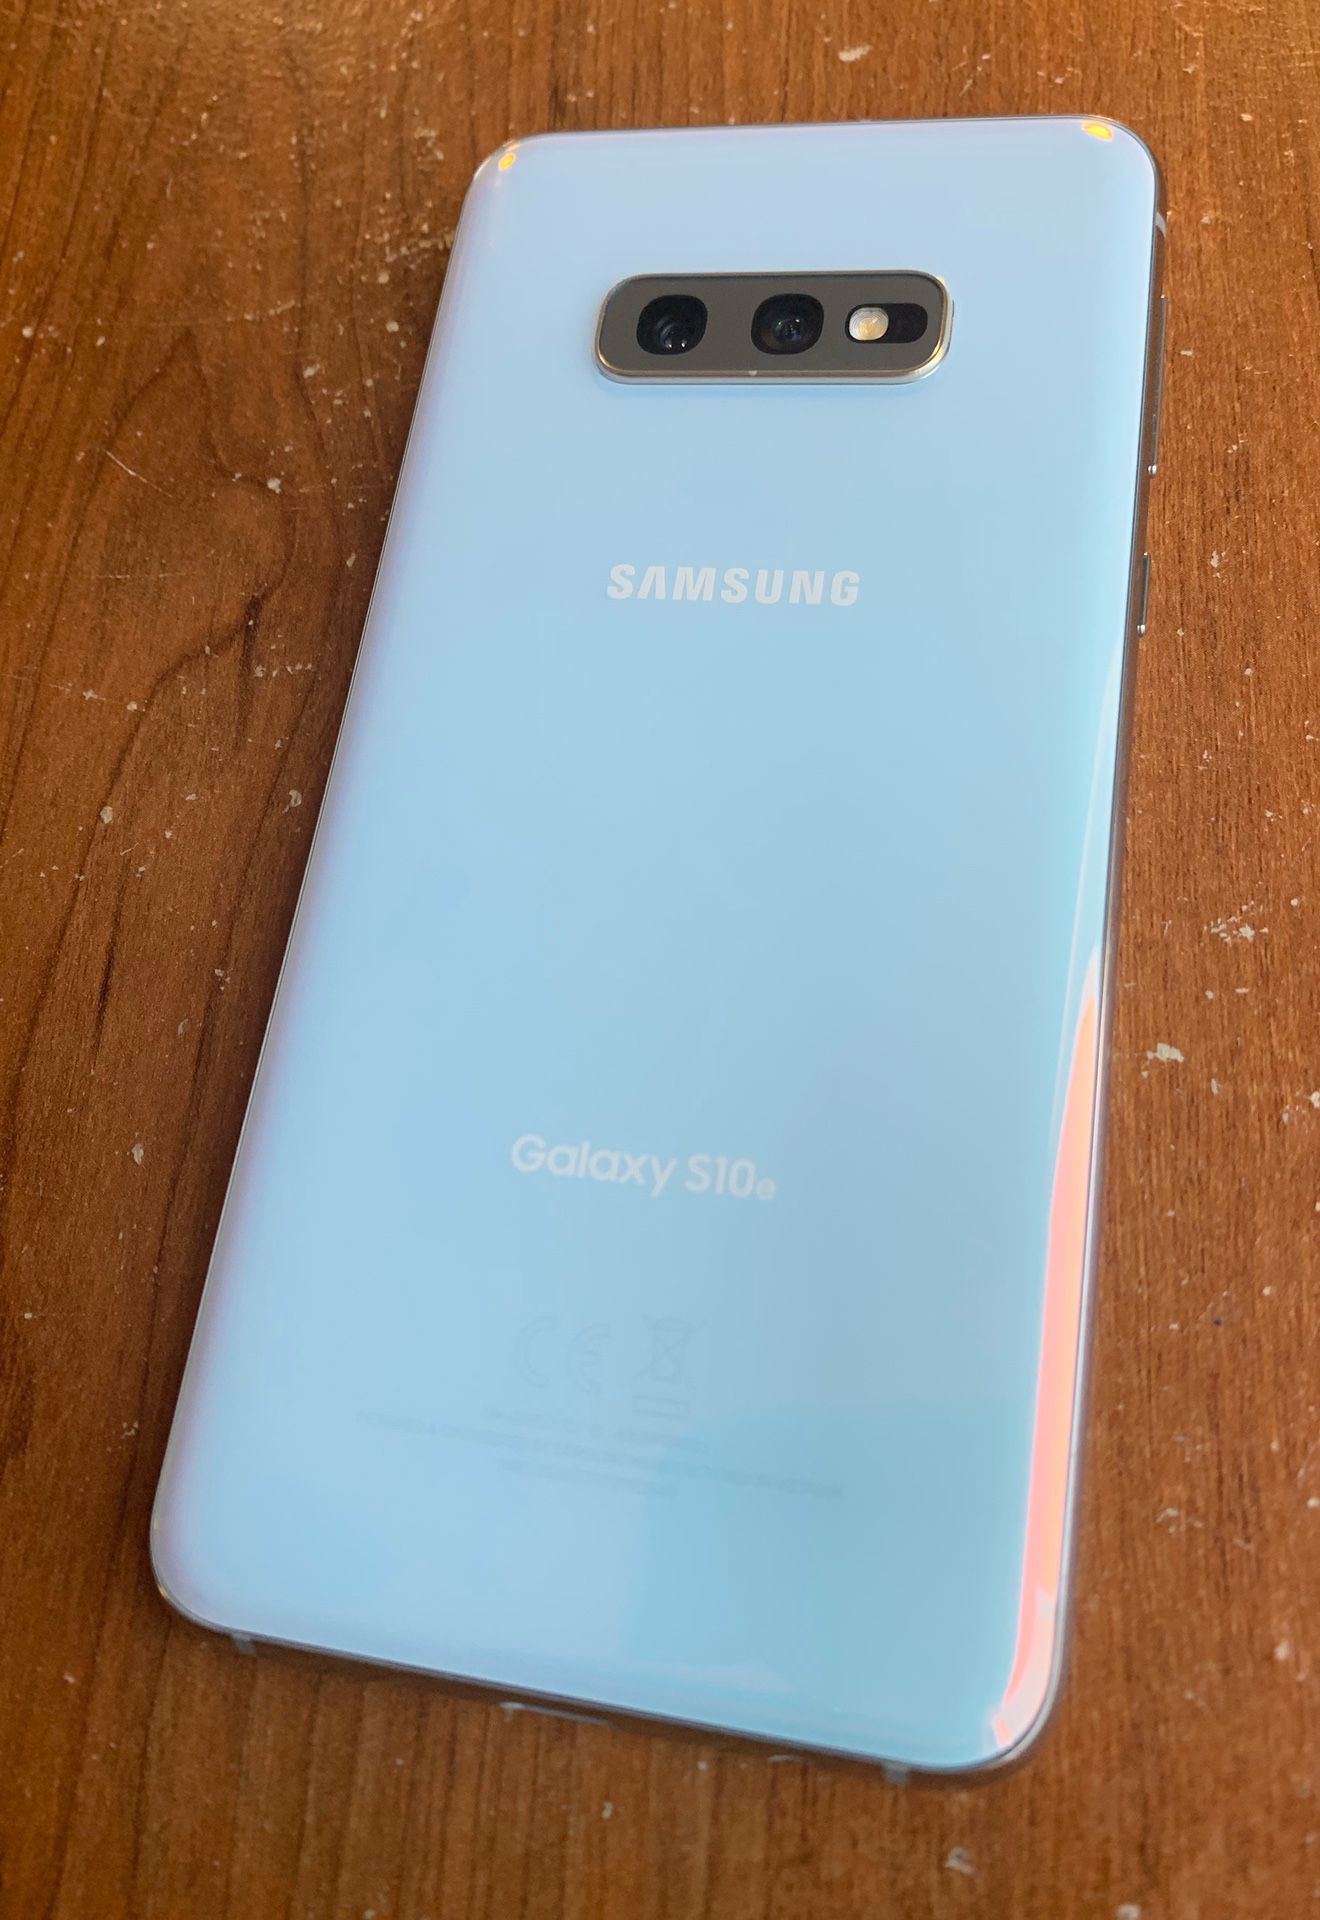 Samsung Galaxy S10e 128gb - Factory Unlocked